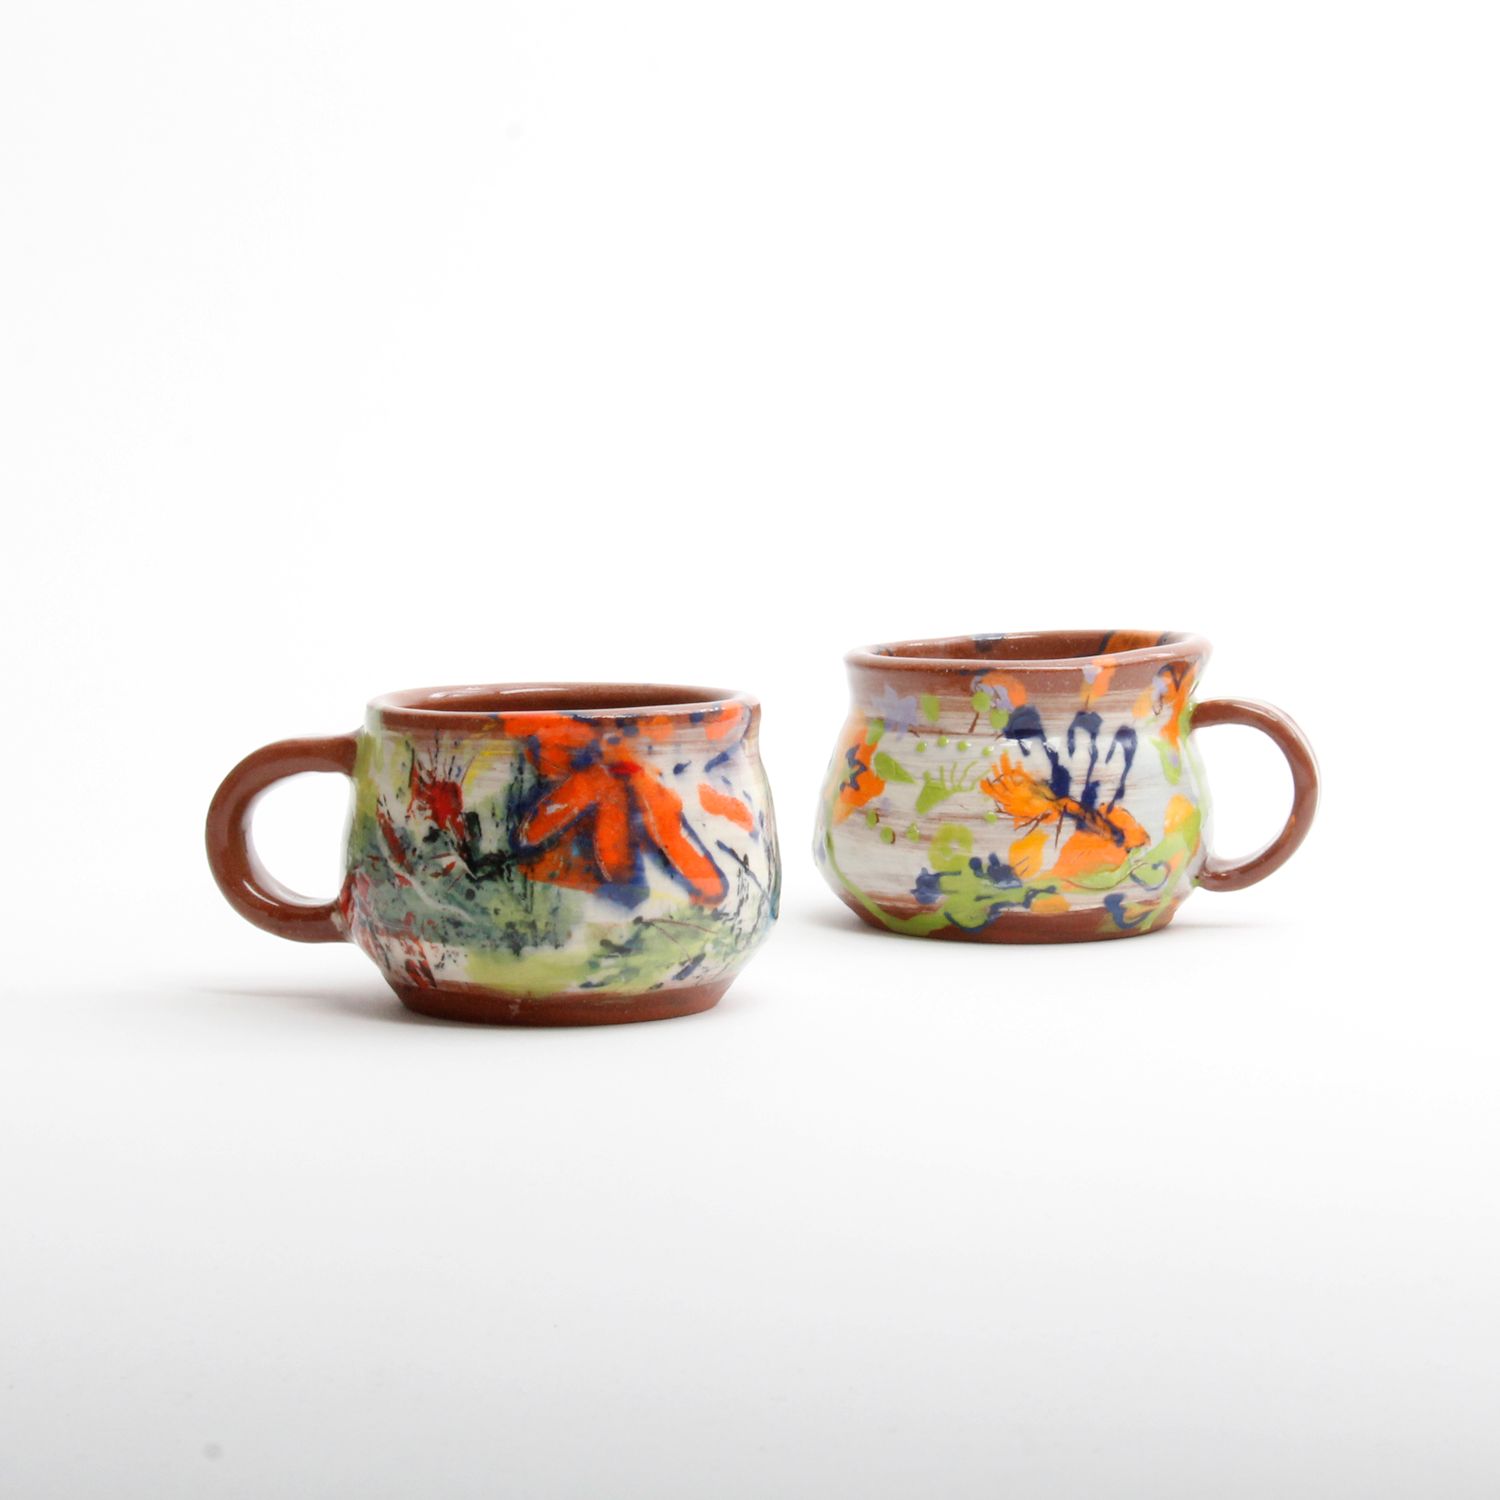 Annie McDonald: Garden mug Product Image 3 of 3